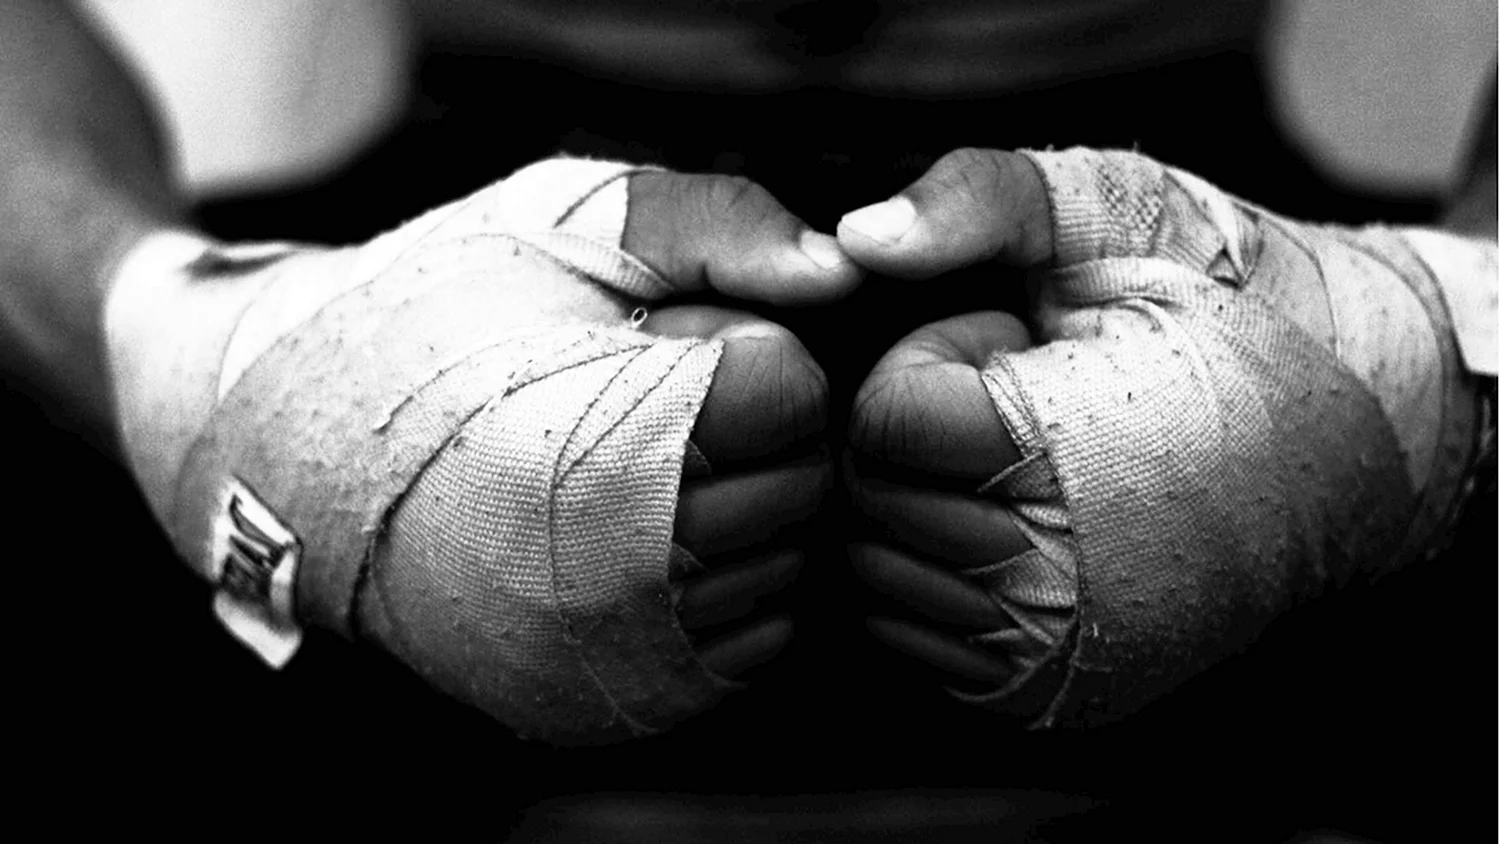 Боксерские бинты на руке